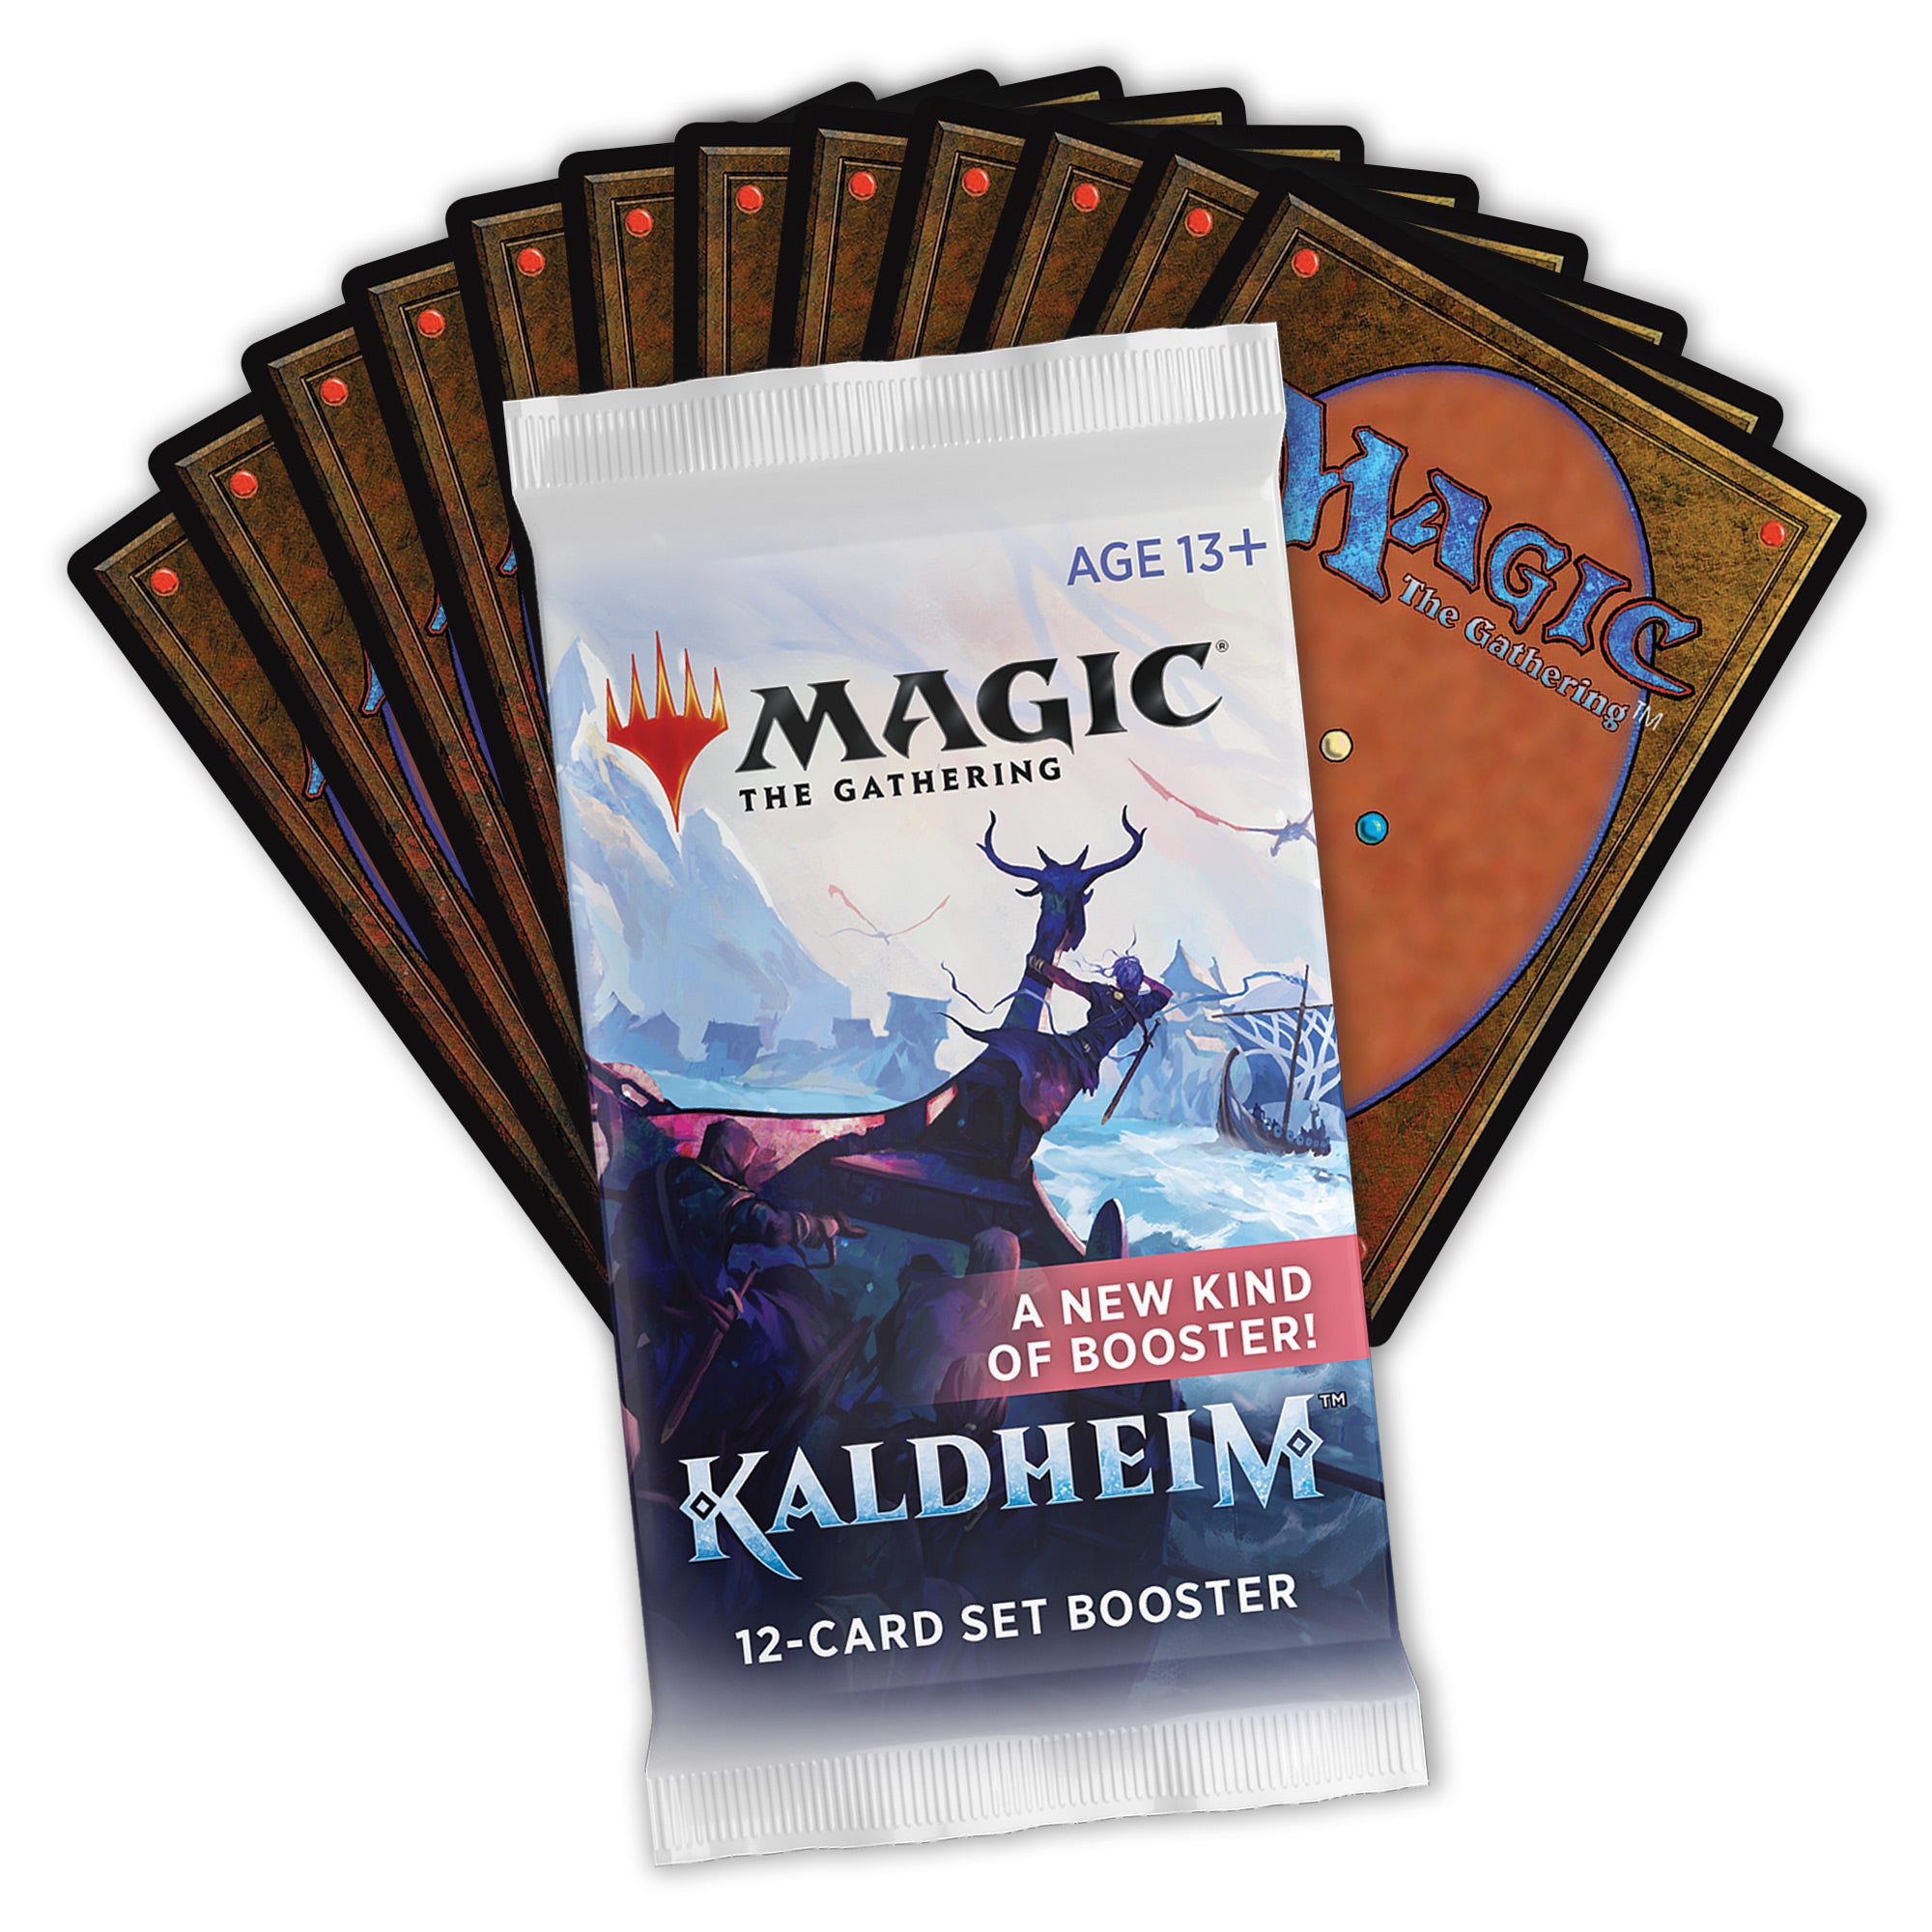 Kaldheim set booster pack